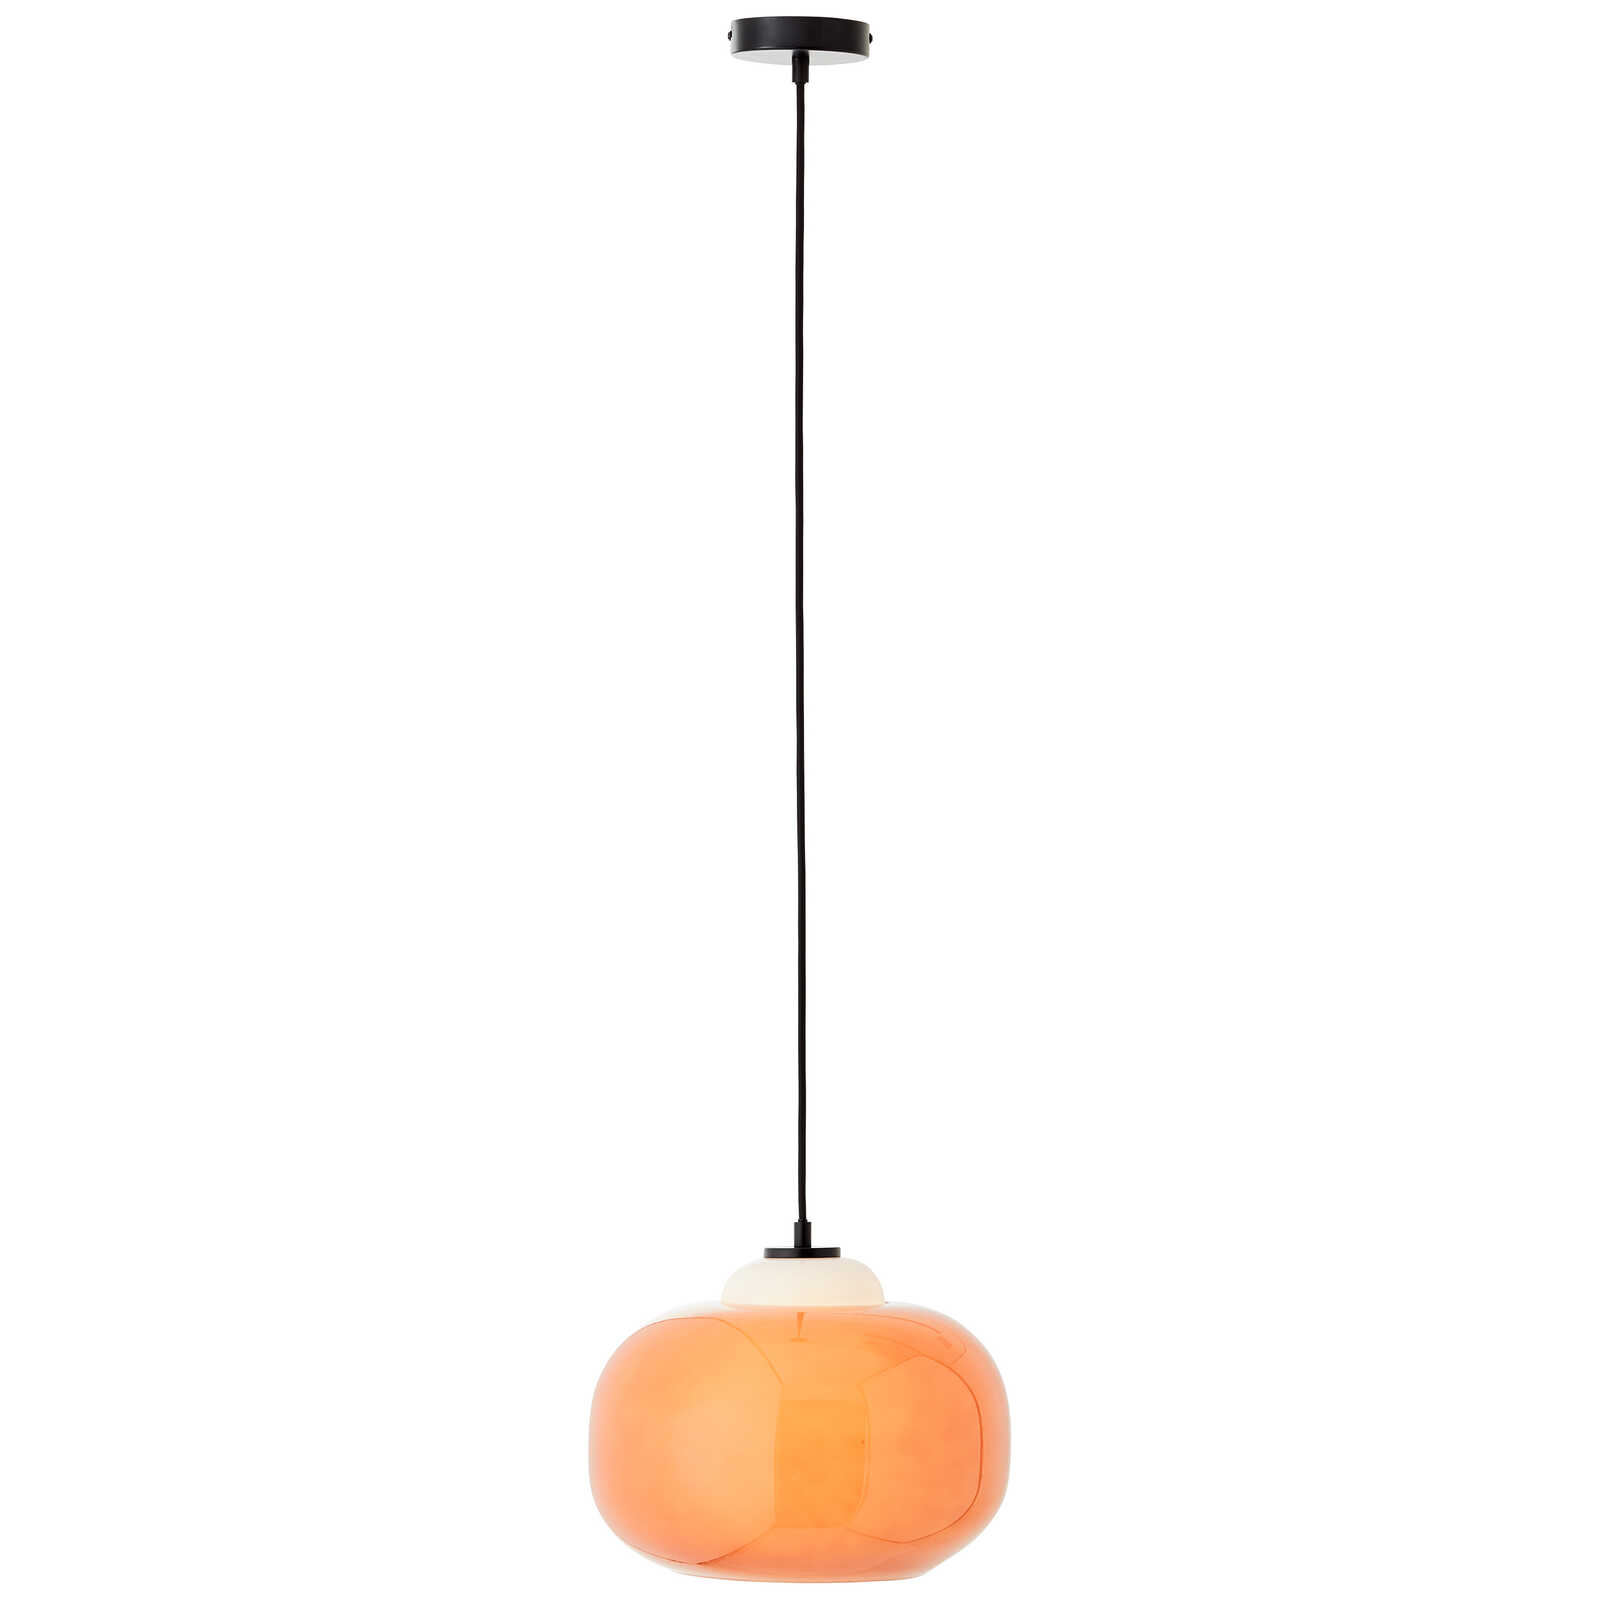             Glazen hanglamp - Carla 2 - Oranje
        